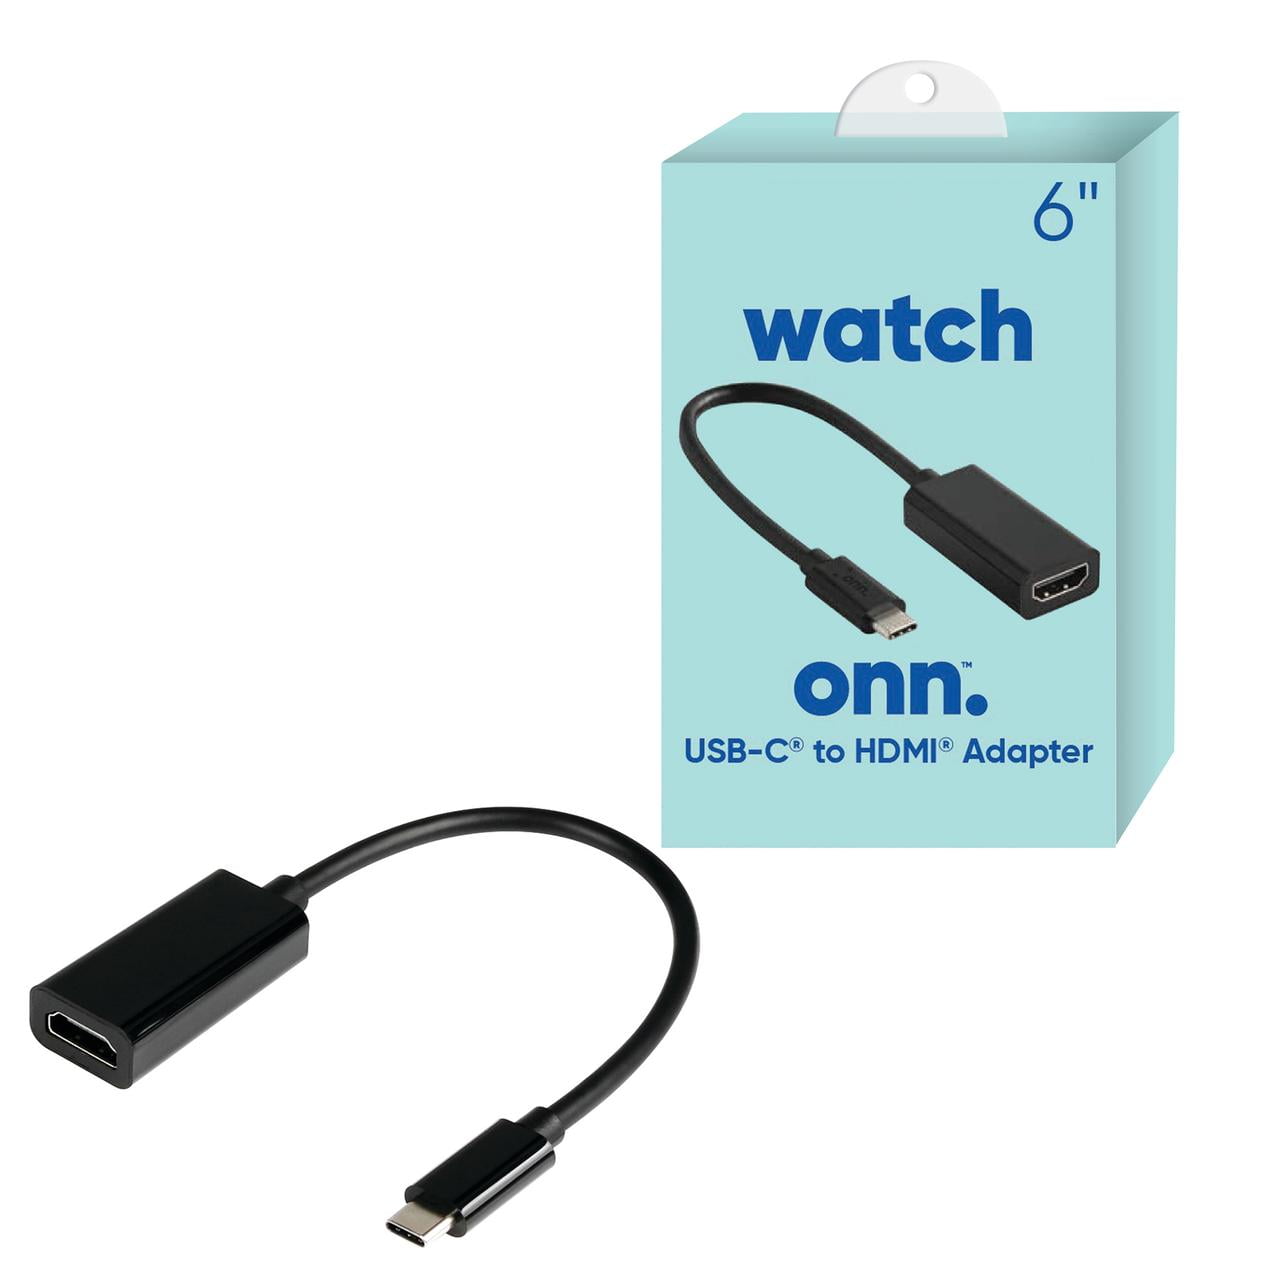 voorzetsel punt Posters onn. 6" USB-C to HDMI Adapter, Black - Walmart.com